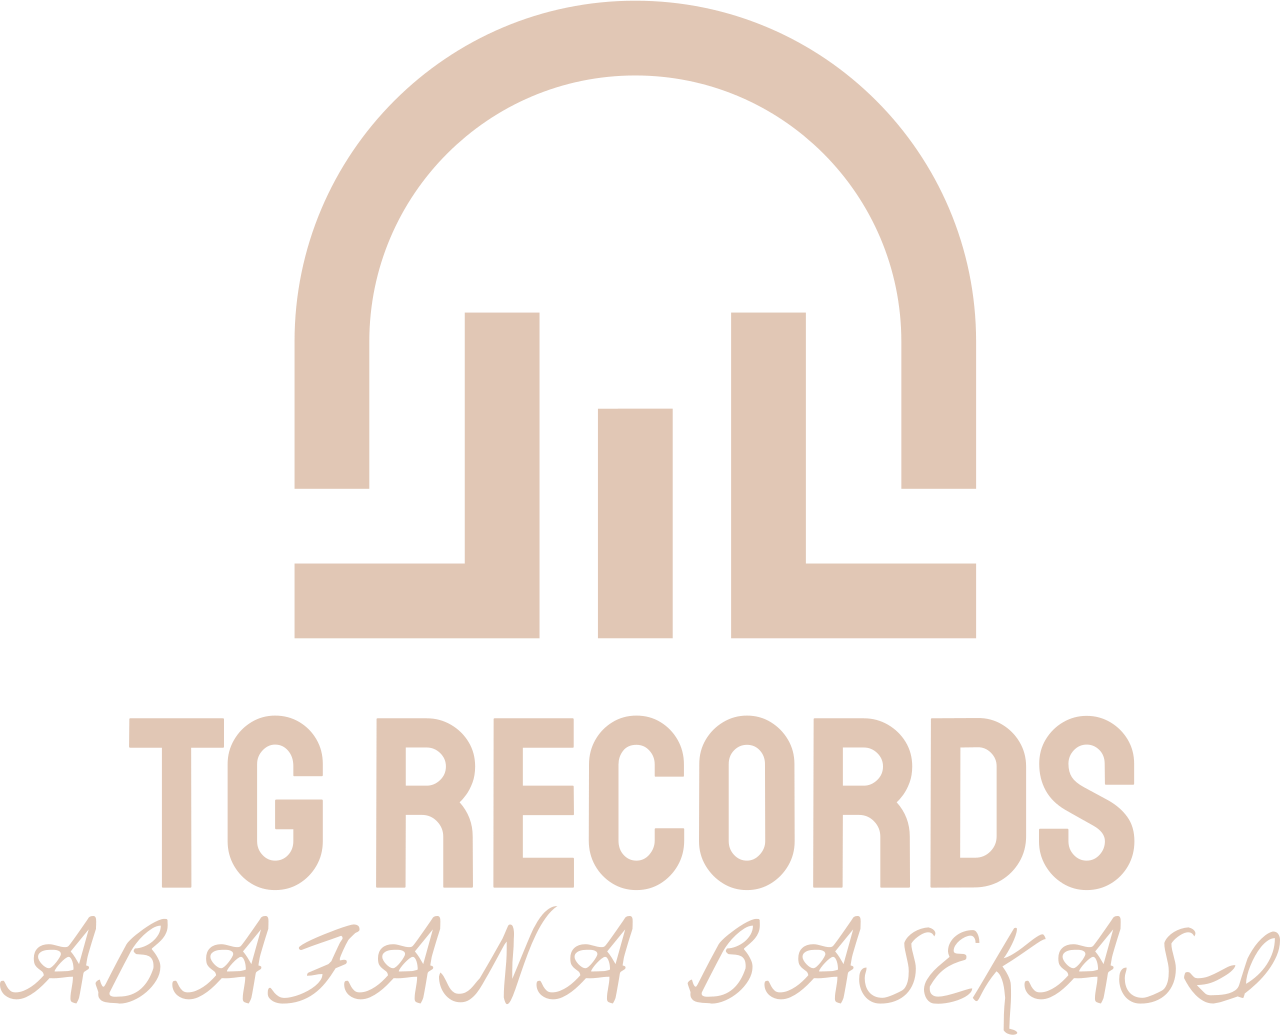 TG RECORDS's logo